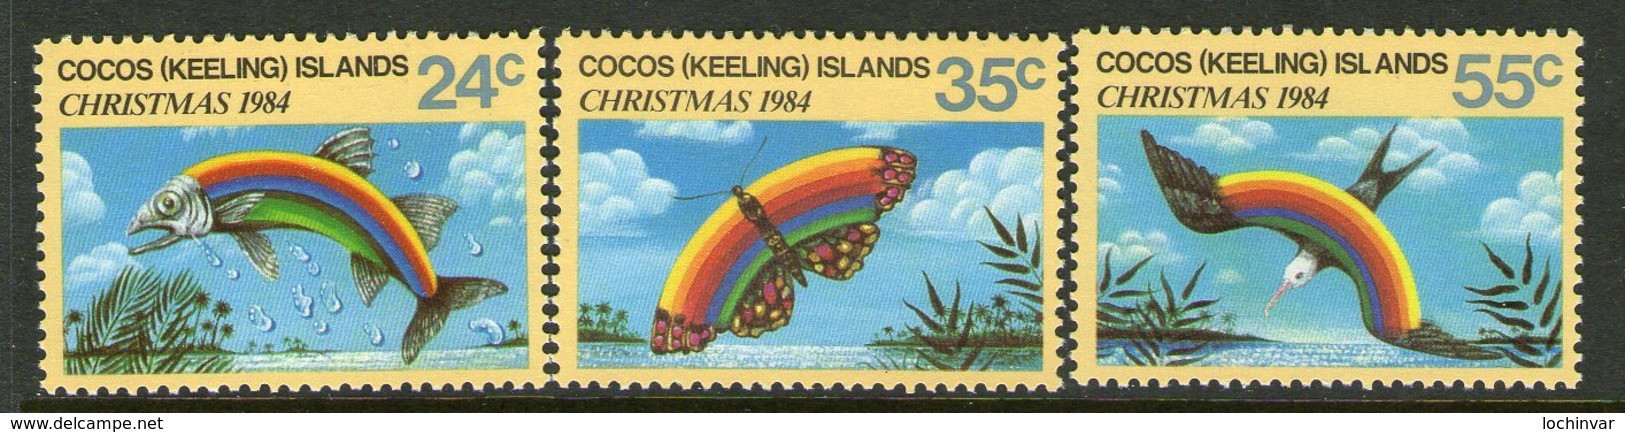 COCOS Is, 1984 XMAS 3 MNH - Kokosinseln (Keeling Islands)